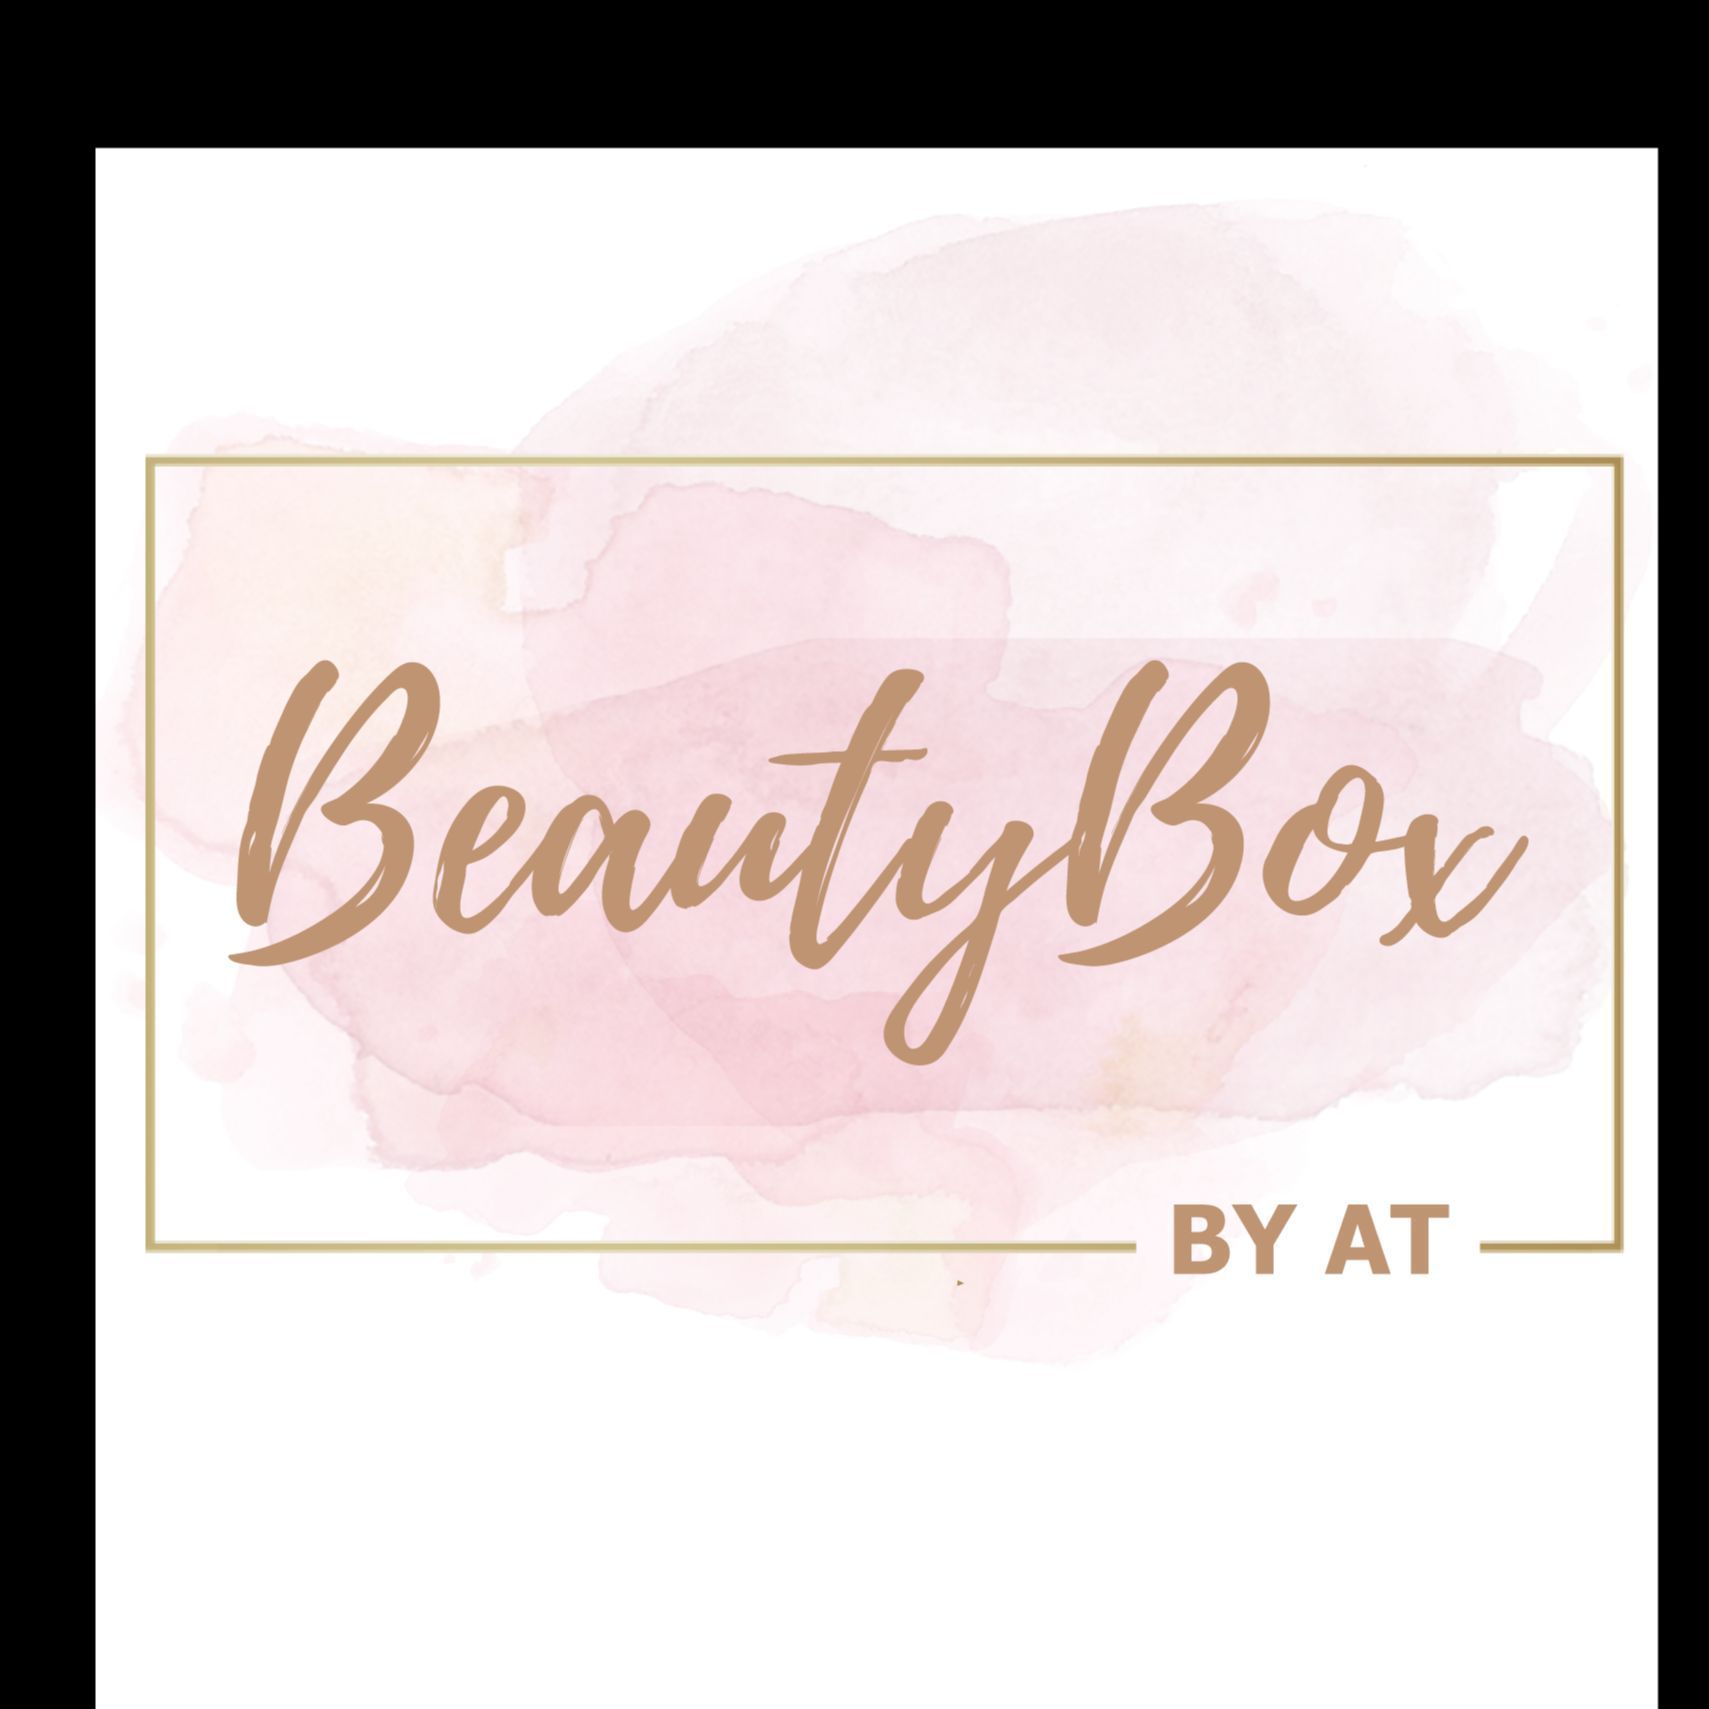 Beautybox by AT, Avenue de l'Amiral Lemonnier, 78160, Marly-le-Roi